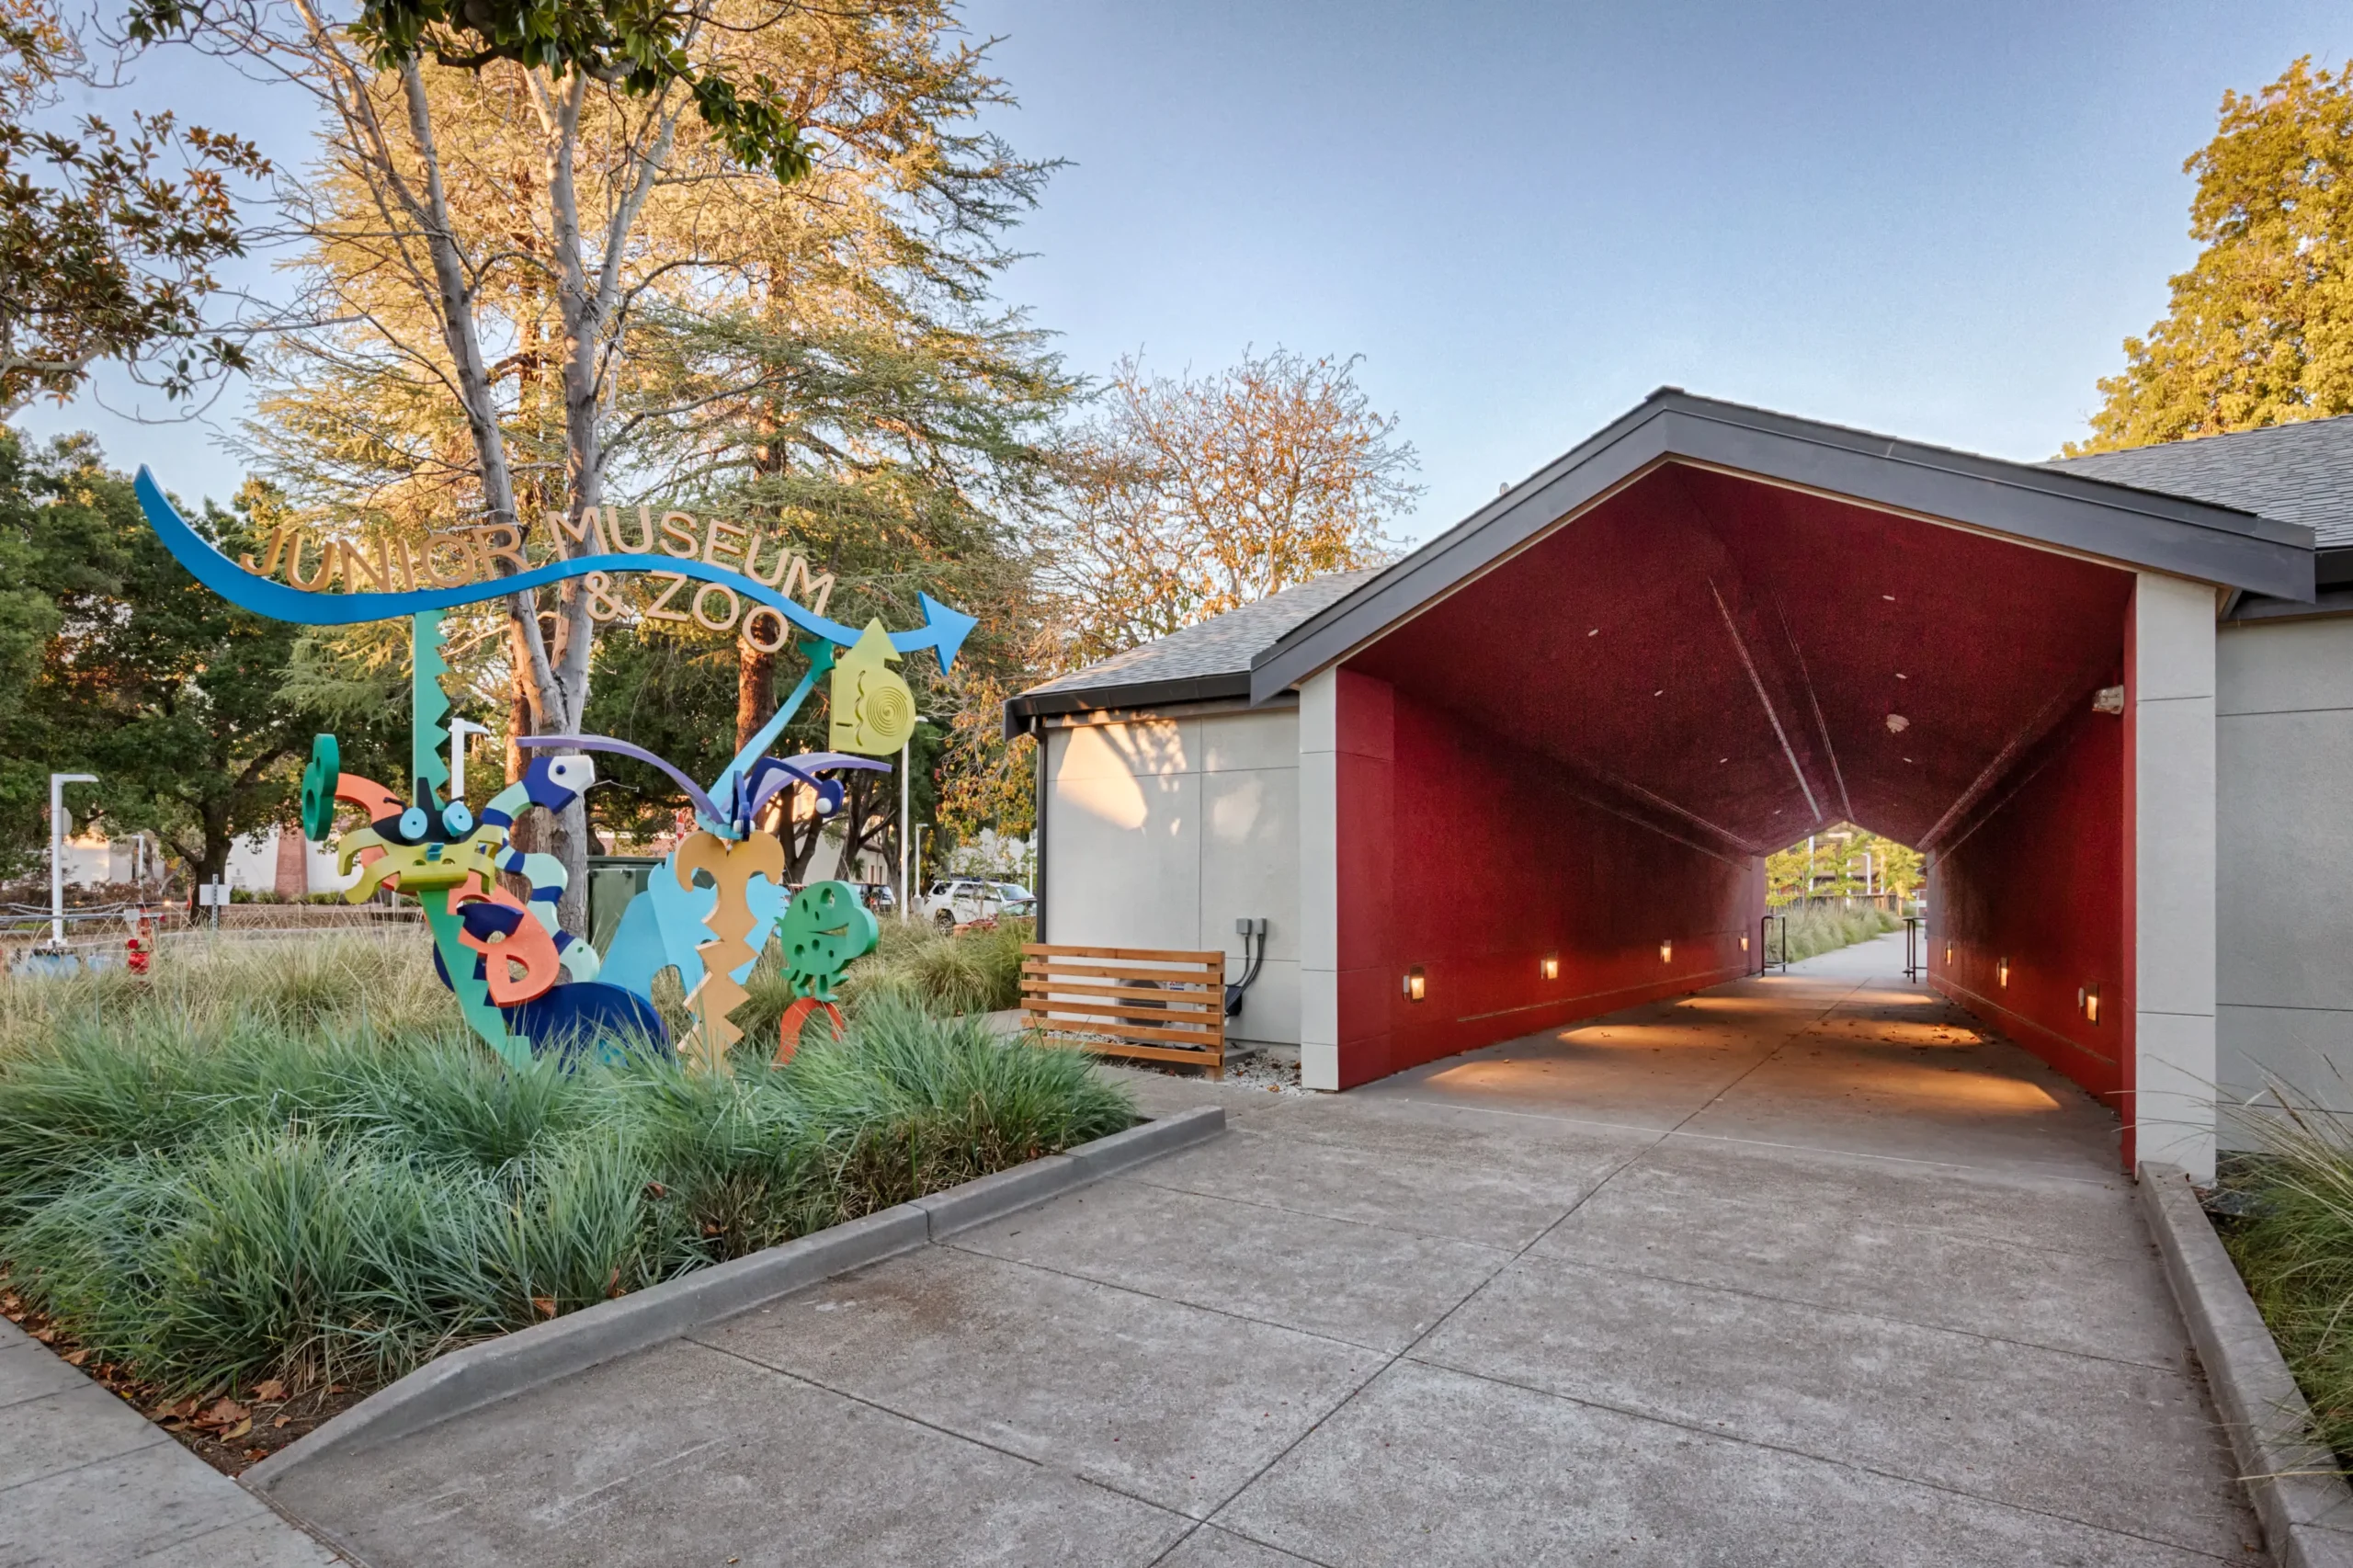 The Junior Museum & Zoo in Palo Alto